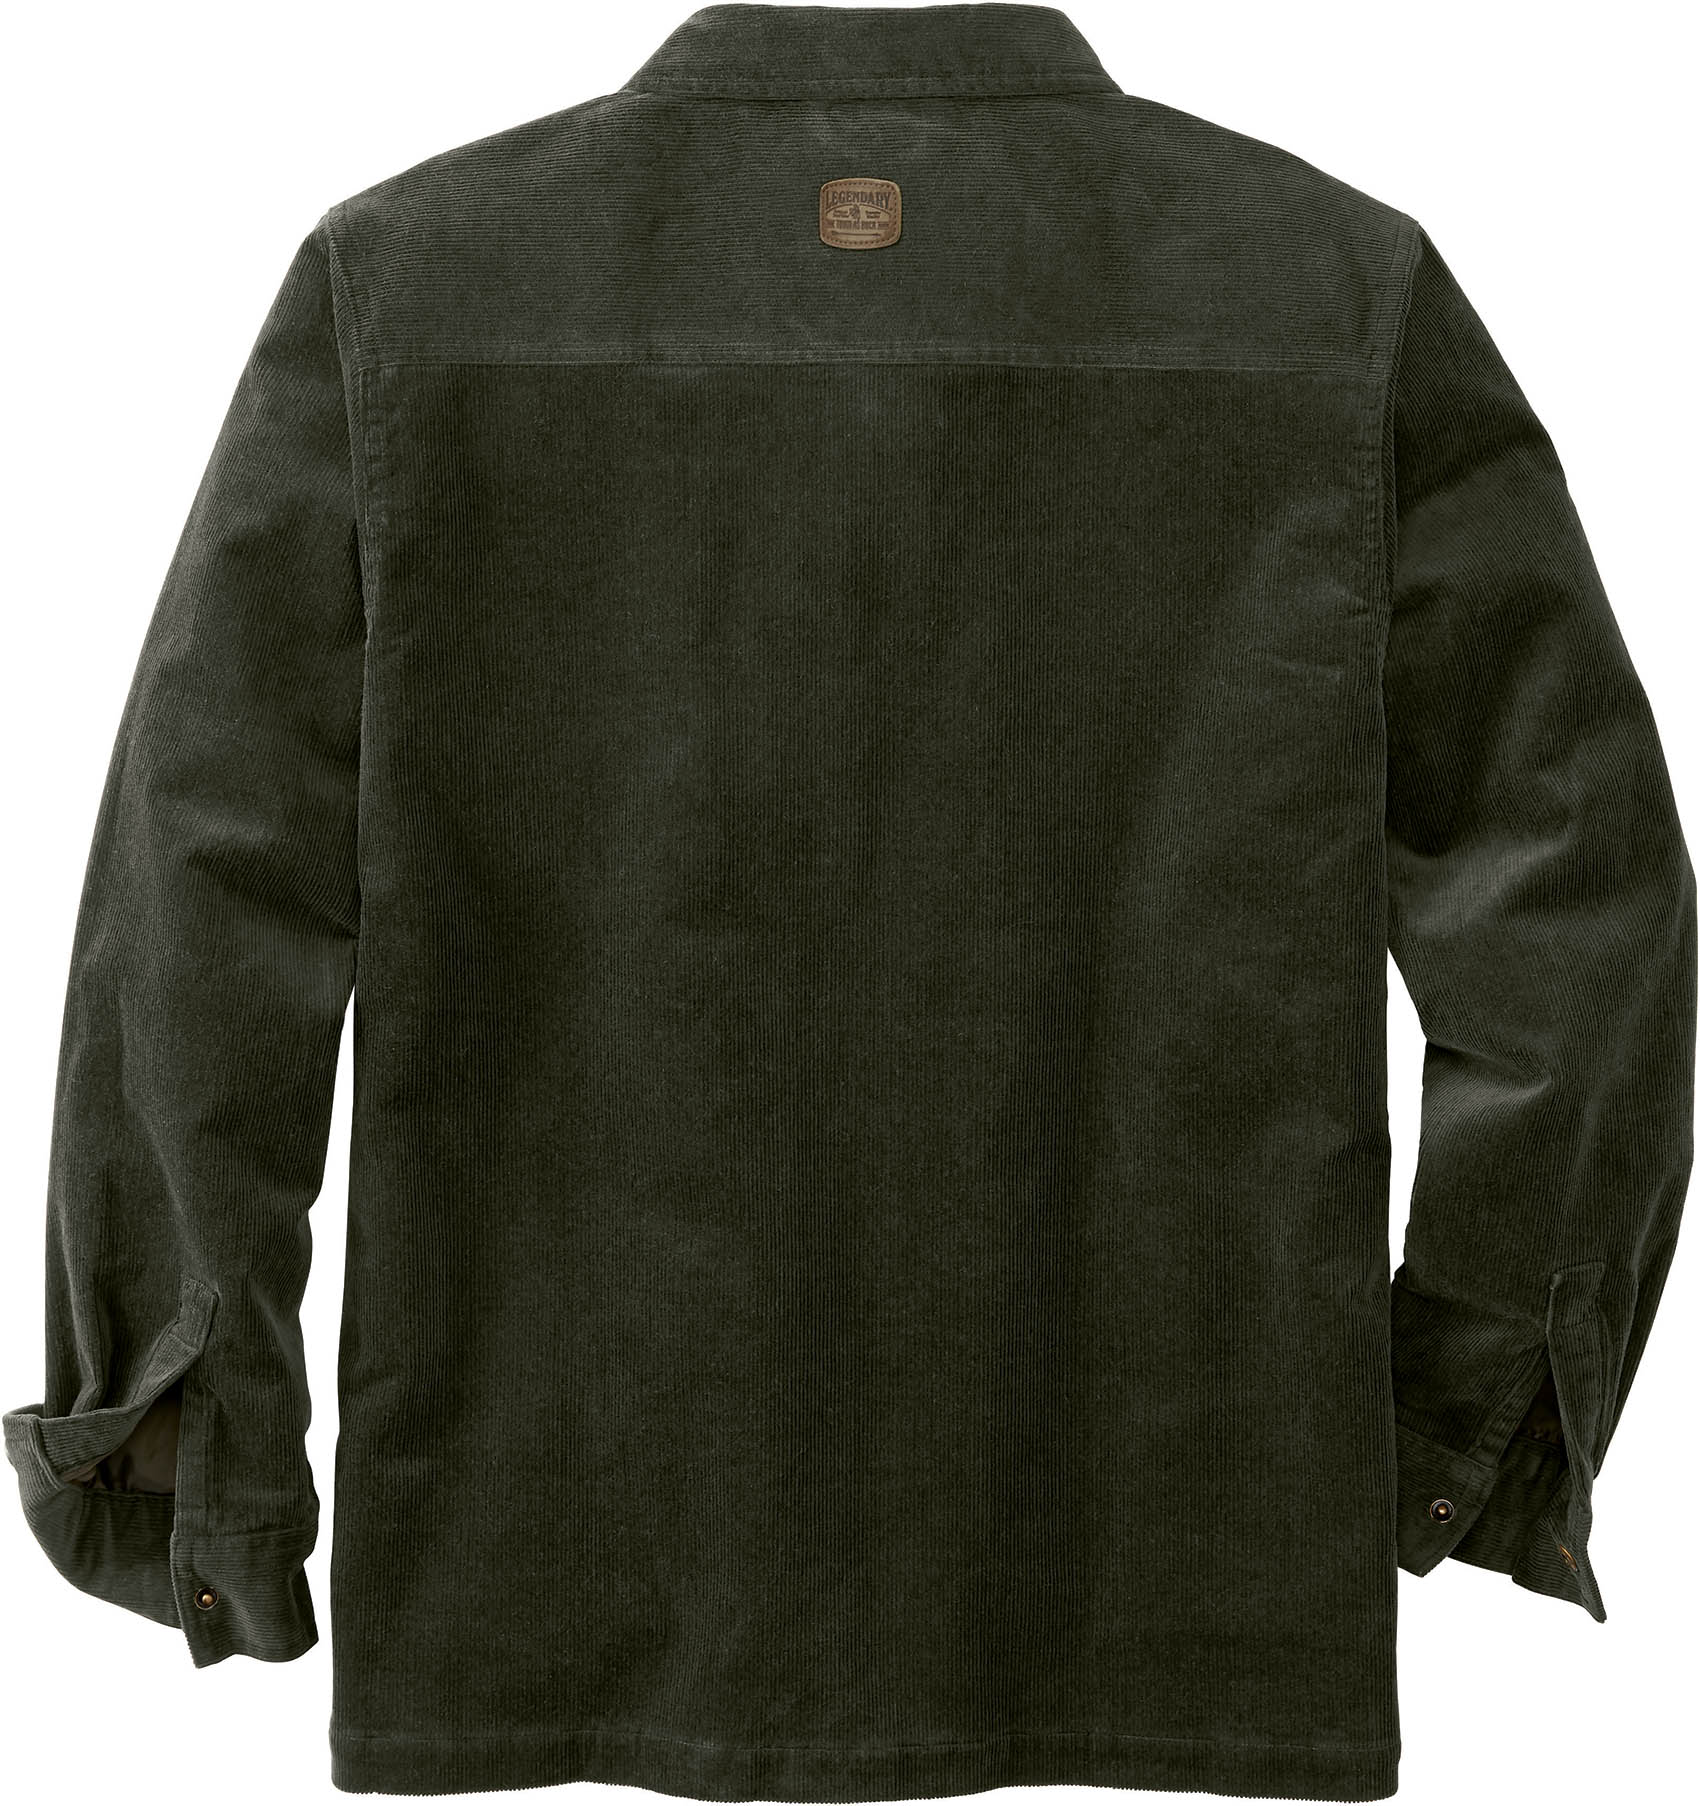 Shop Men's Tough As Buck Corduroy Shirt Jacket | Legendary Whitetails